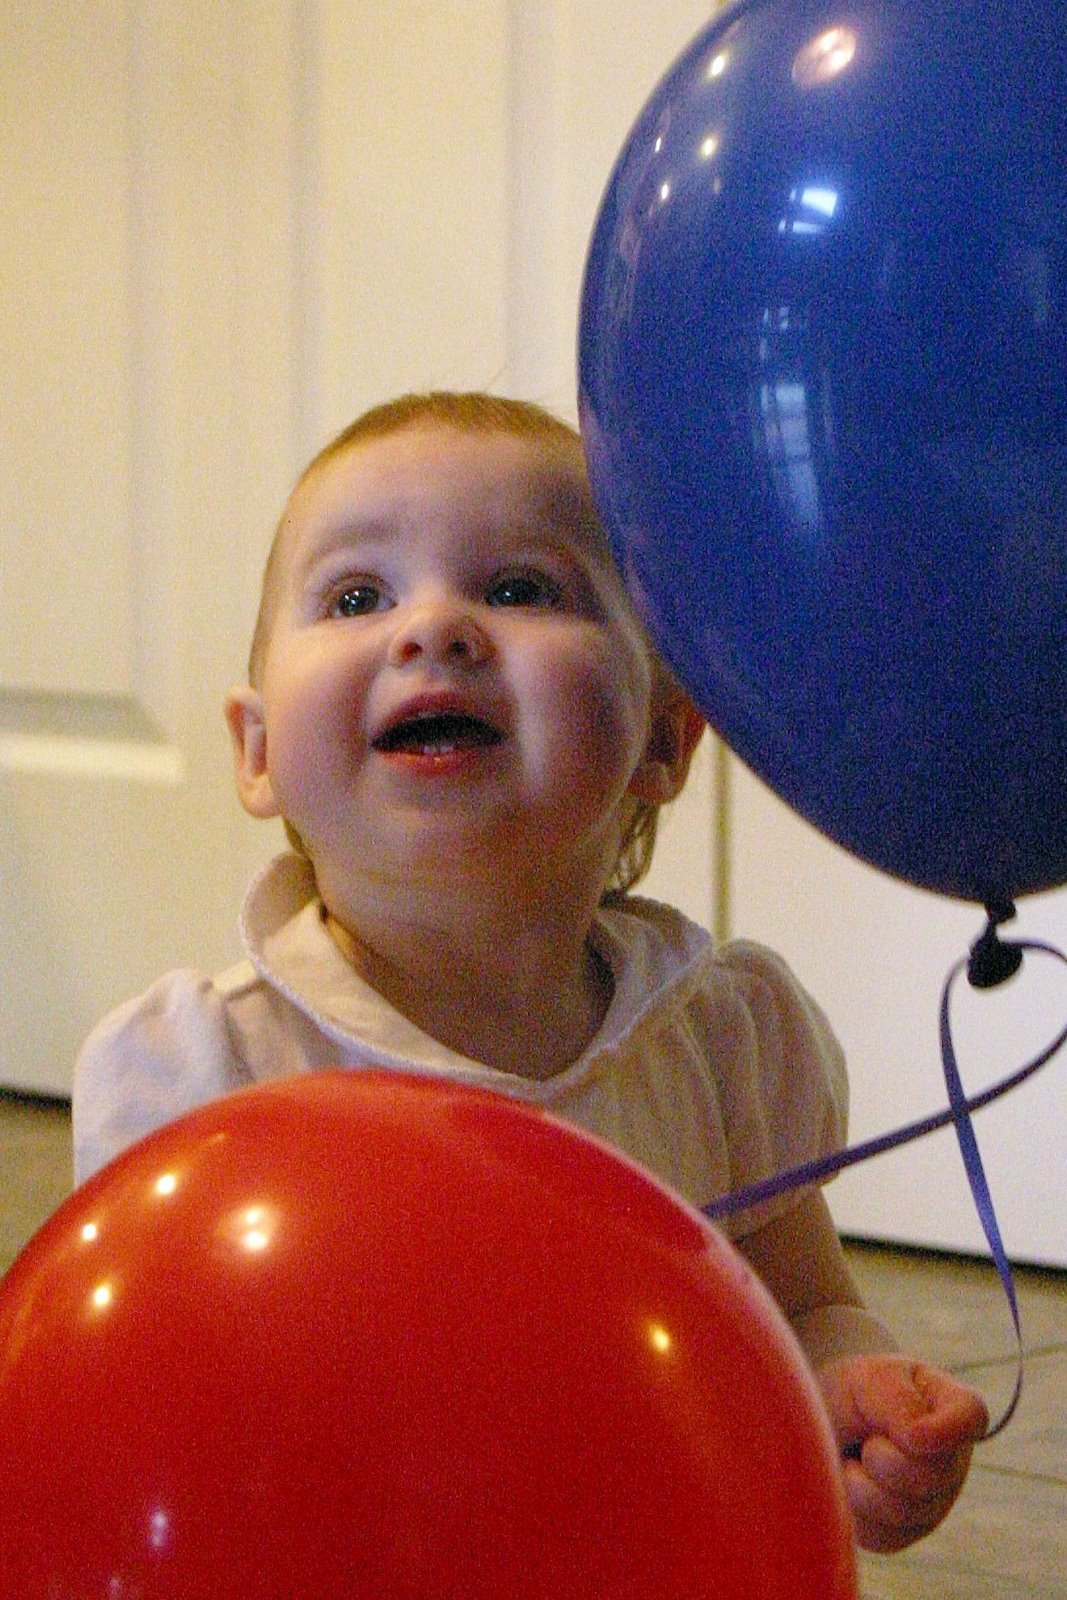 [josie+with+balloons.jpg]